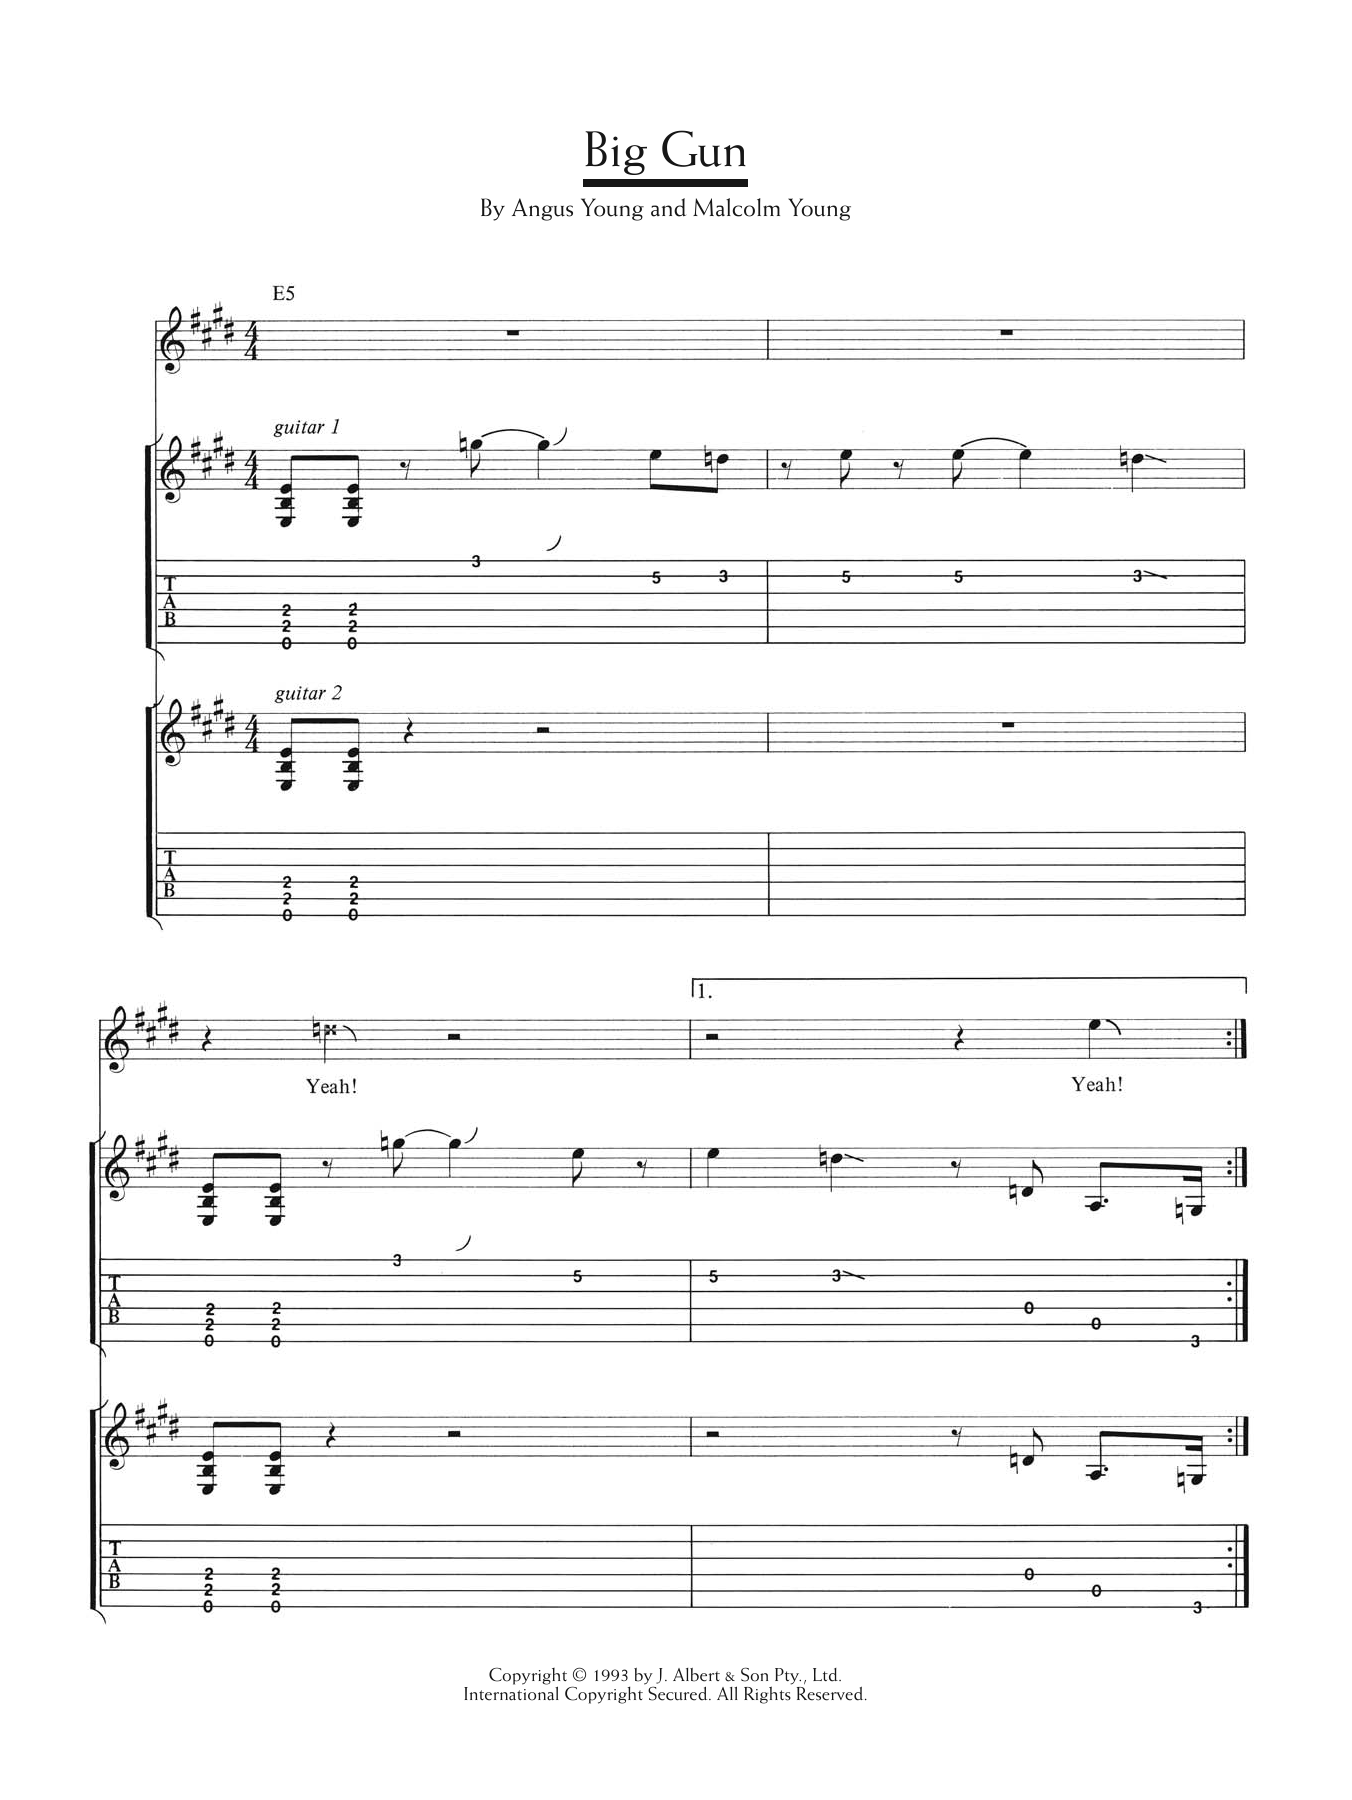 AC/DC Big Gun sheet music notes and chords arranged for Guitar Tab